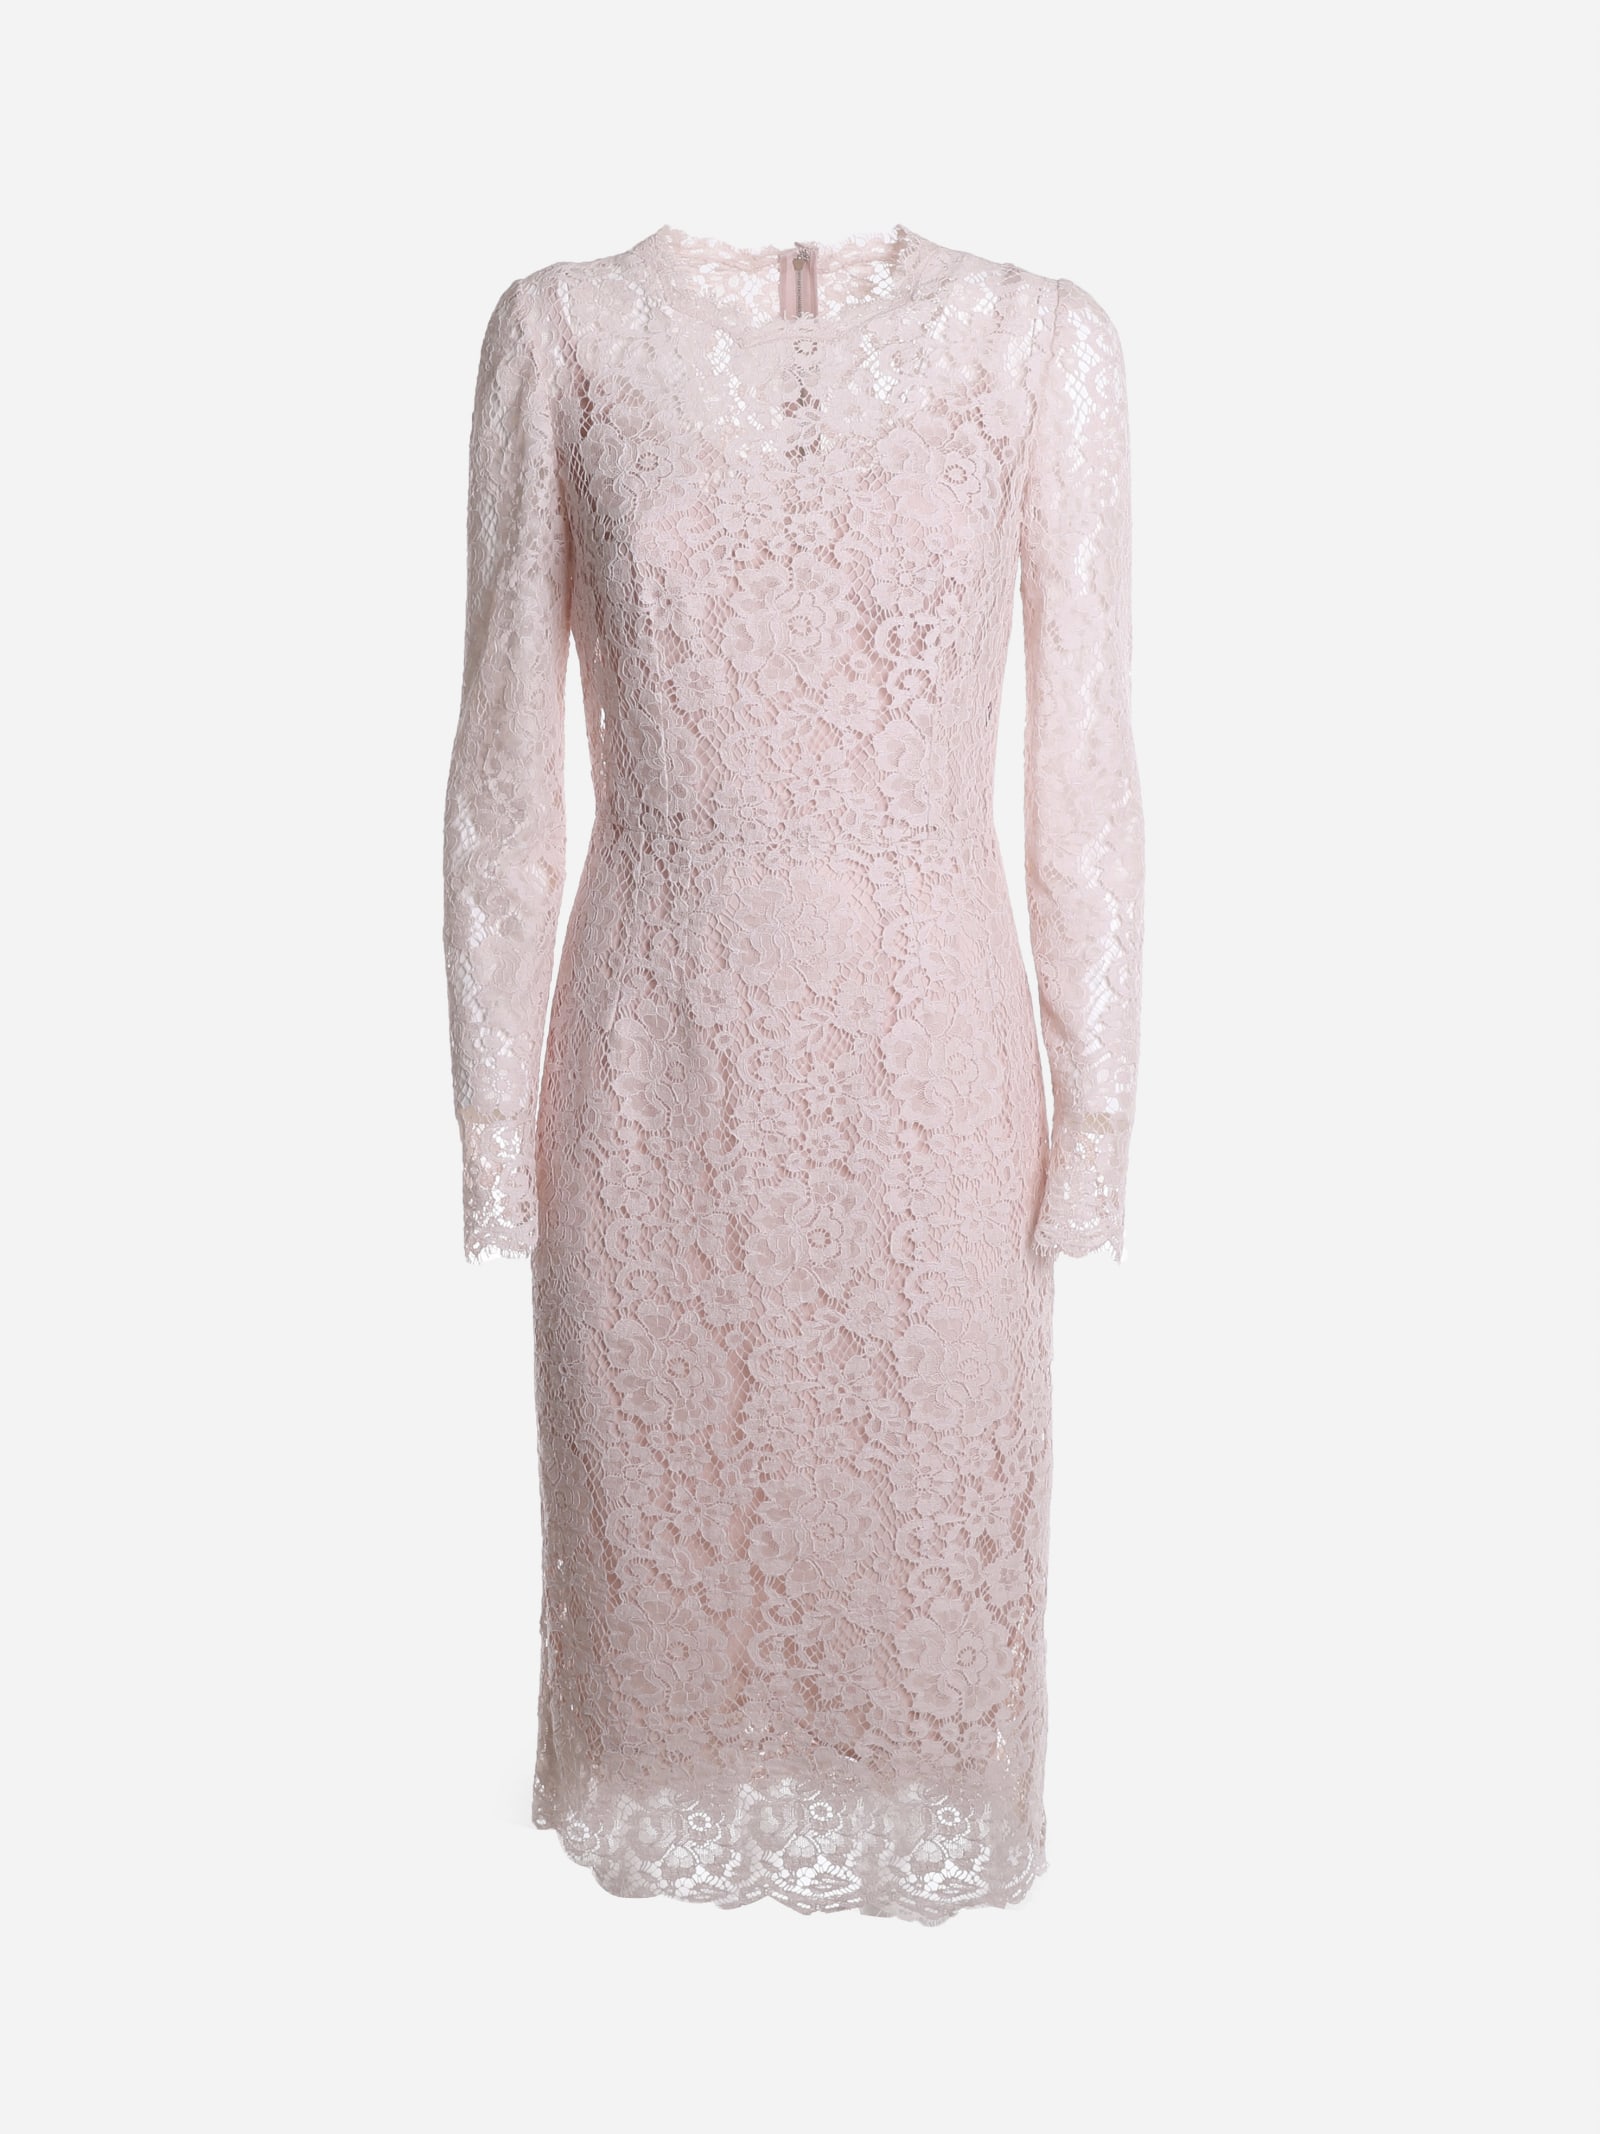 Dolce & Gabbana Pink Laced Dress